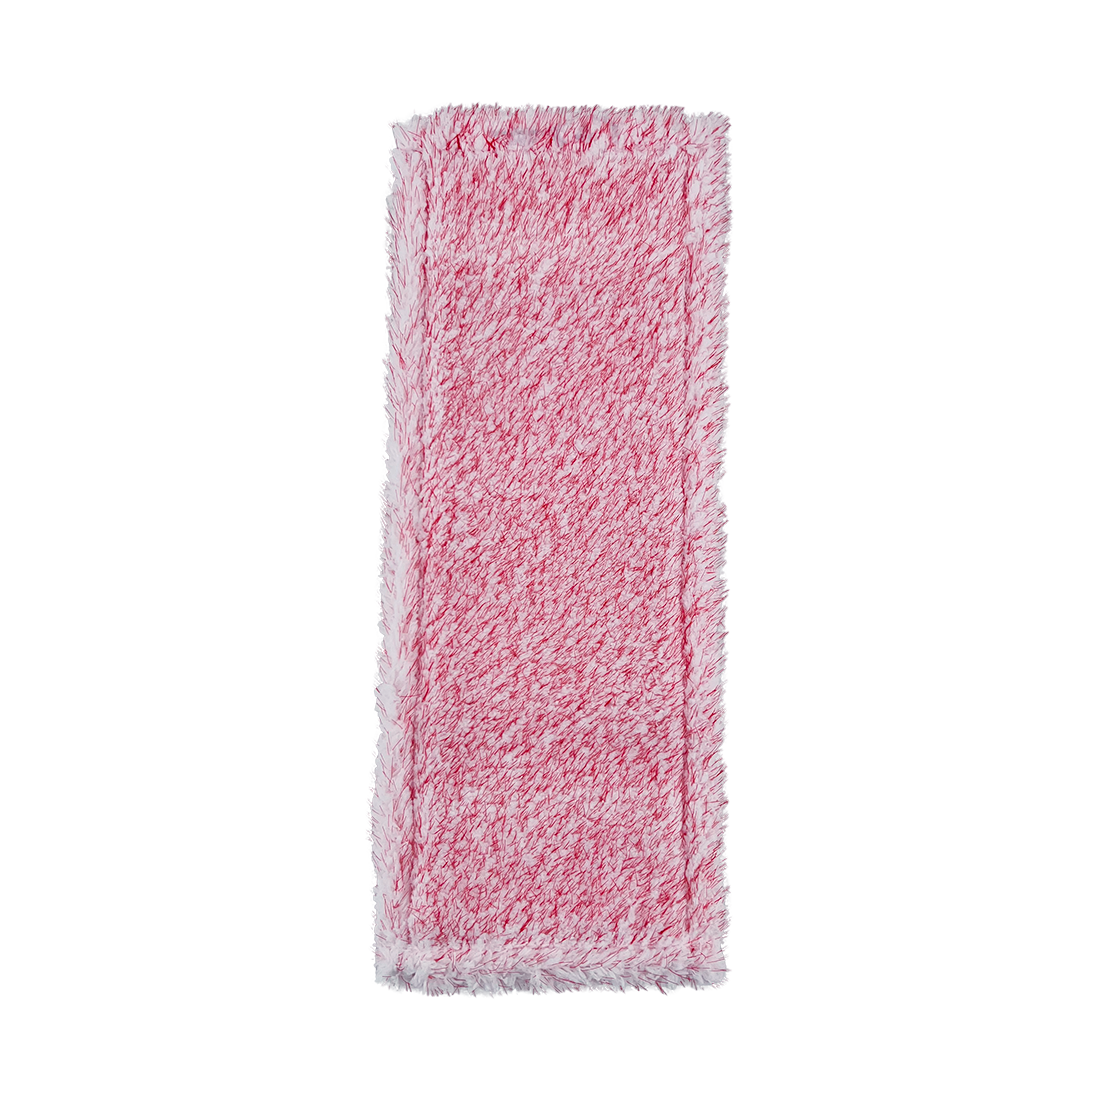 UH PREMIUM Microfaser Borstenmopp Igel, weiß mit roten Borsten, 40 cm